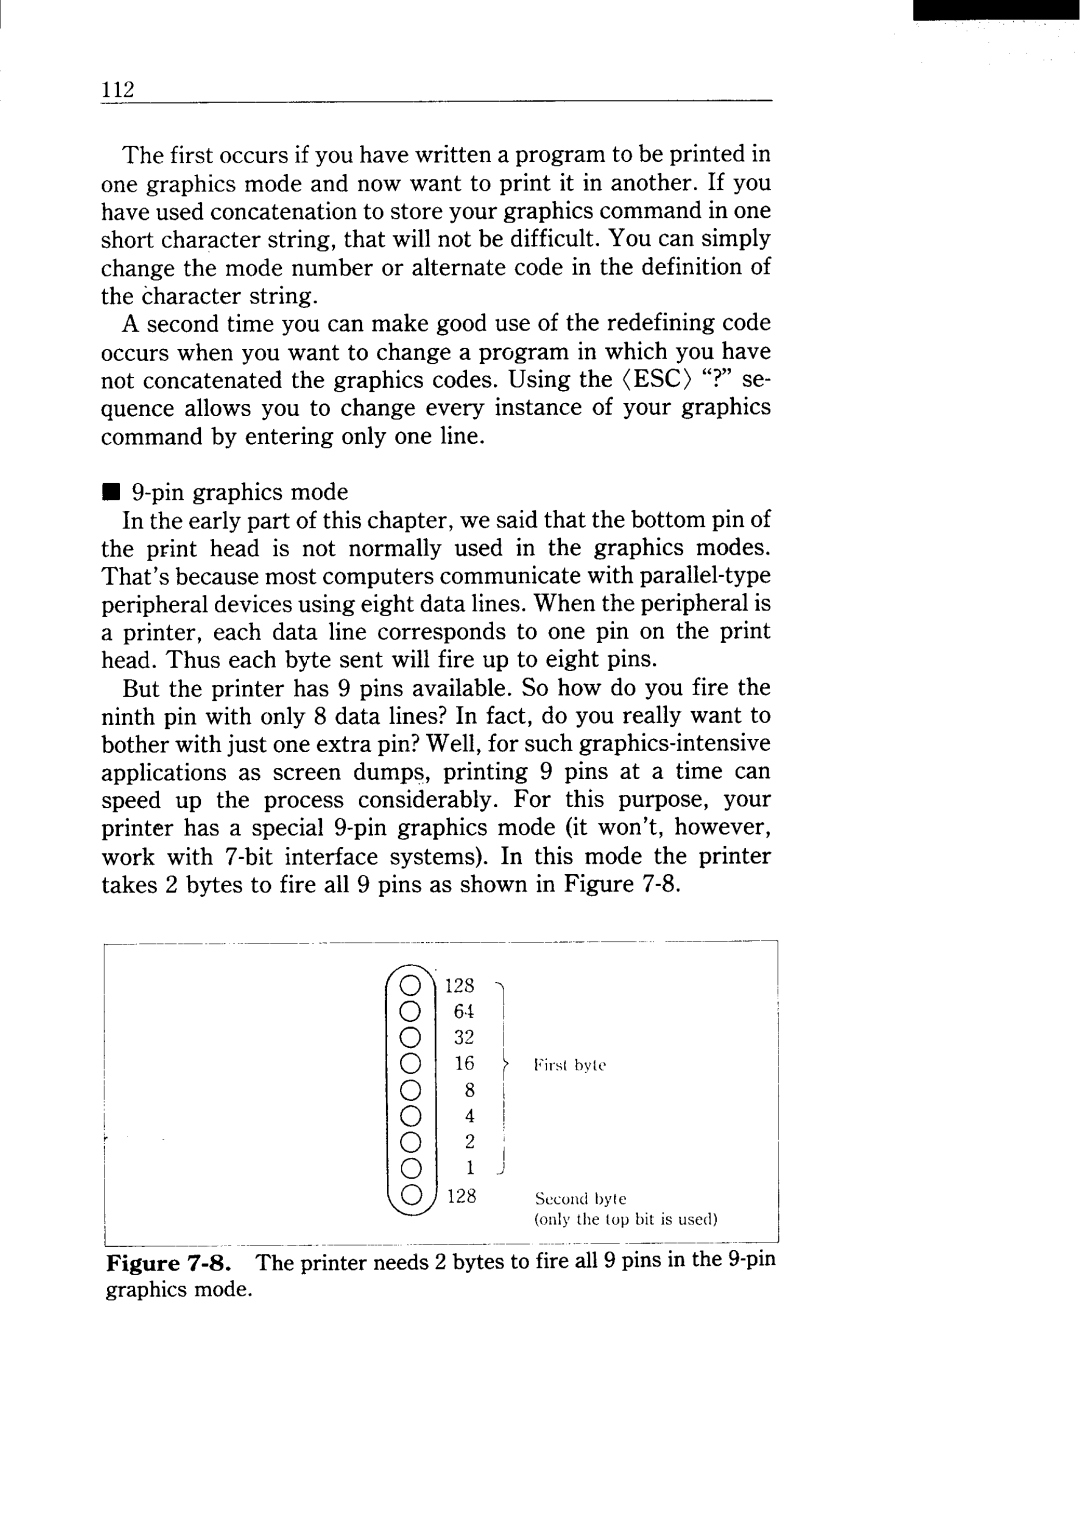 Star Micronics NX-15 user manual pin graphics mode 